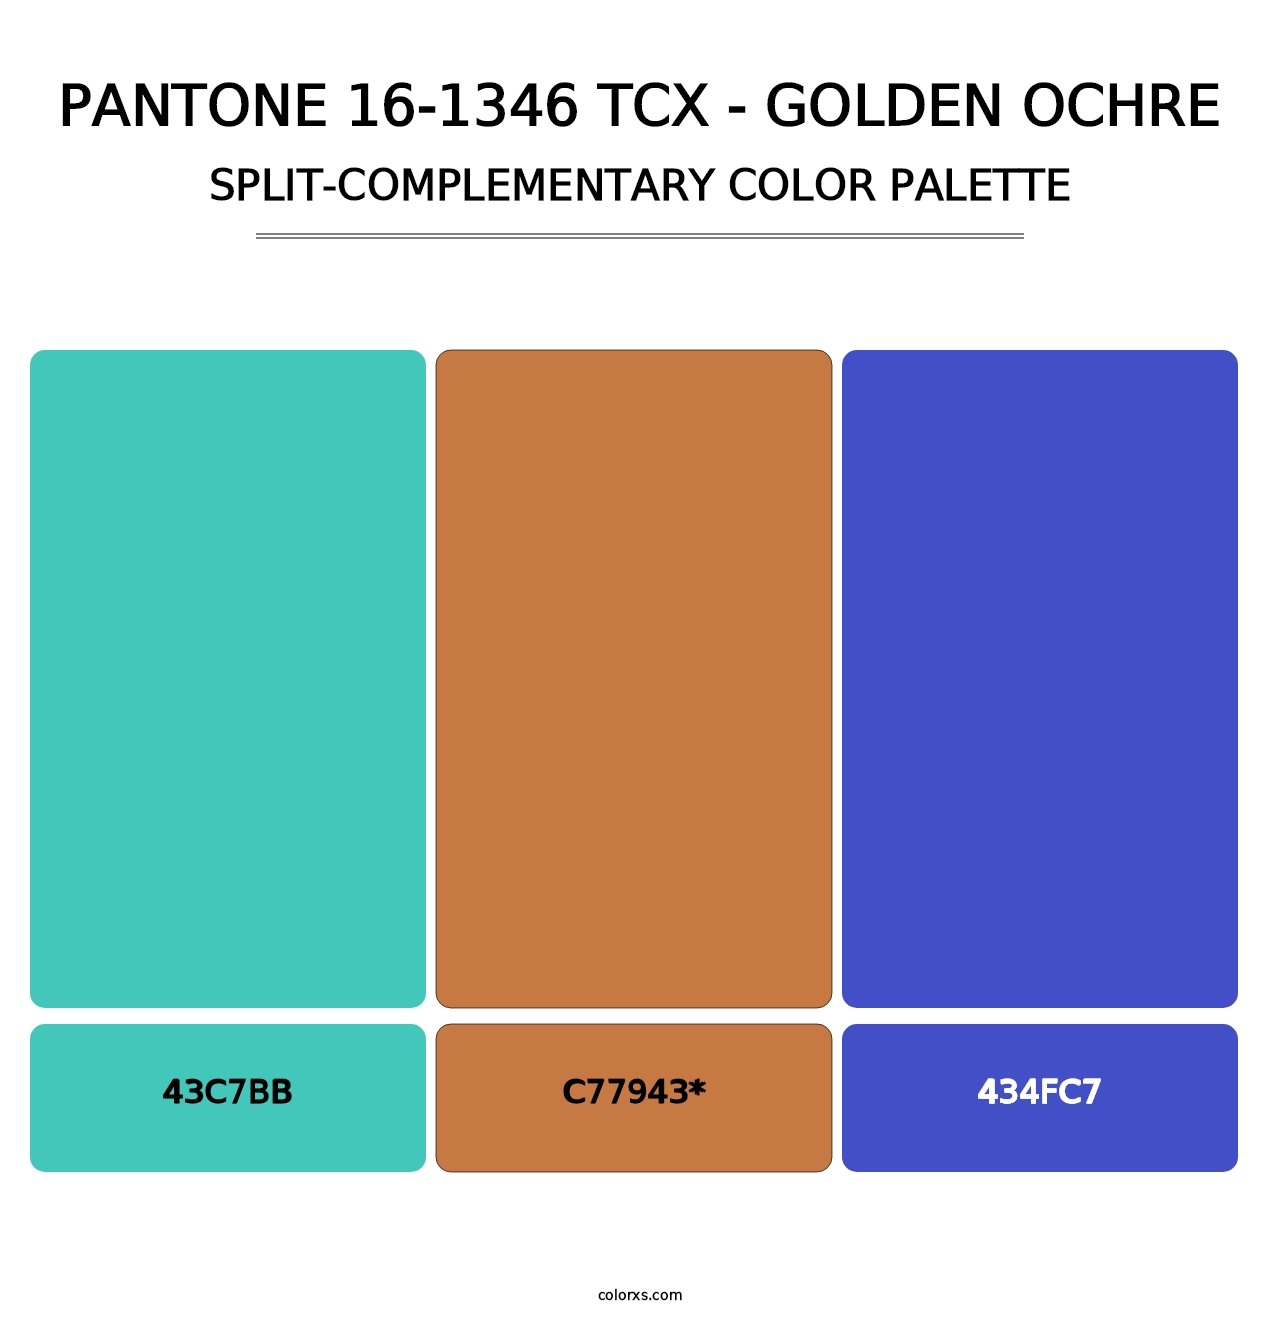 PANTONE 16-1346 TCX - Golden Ochre - Split-Complementary Color Palette